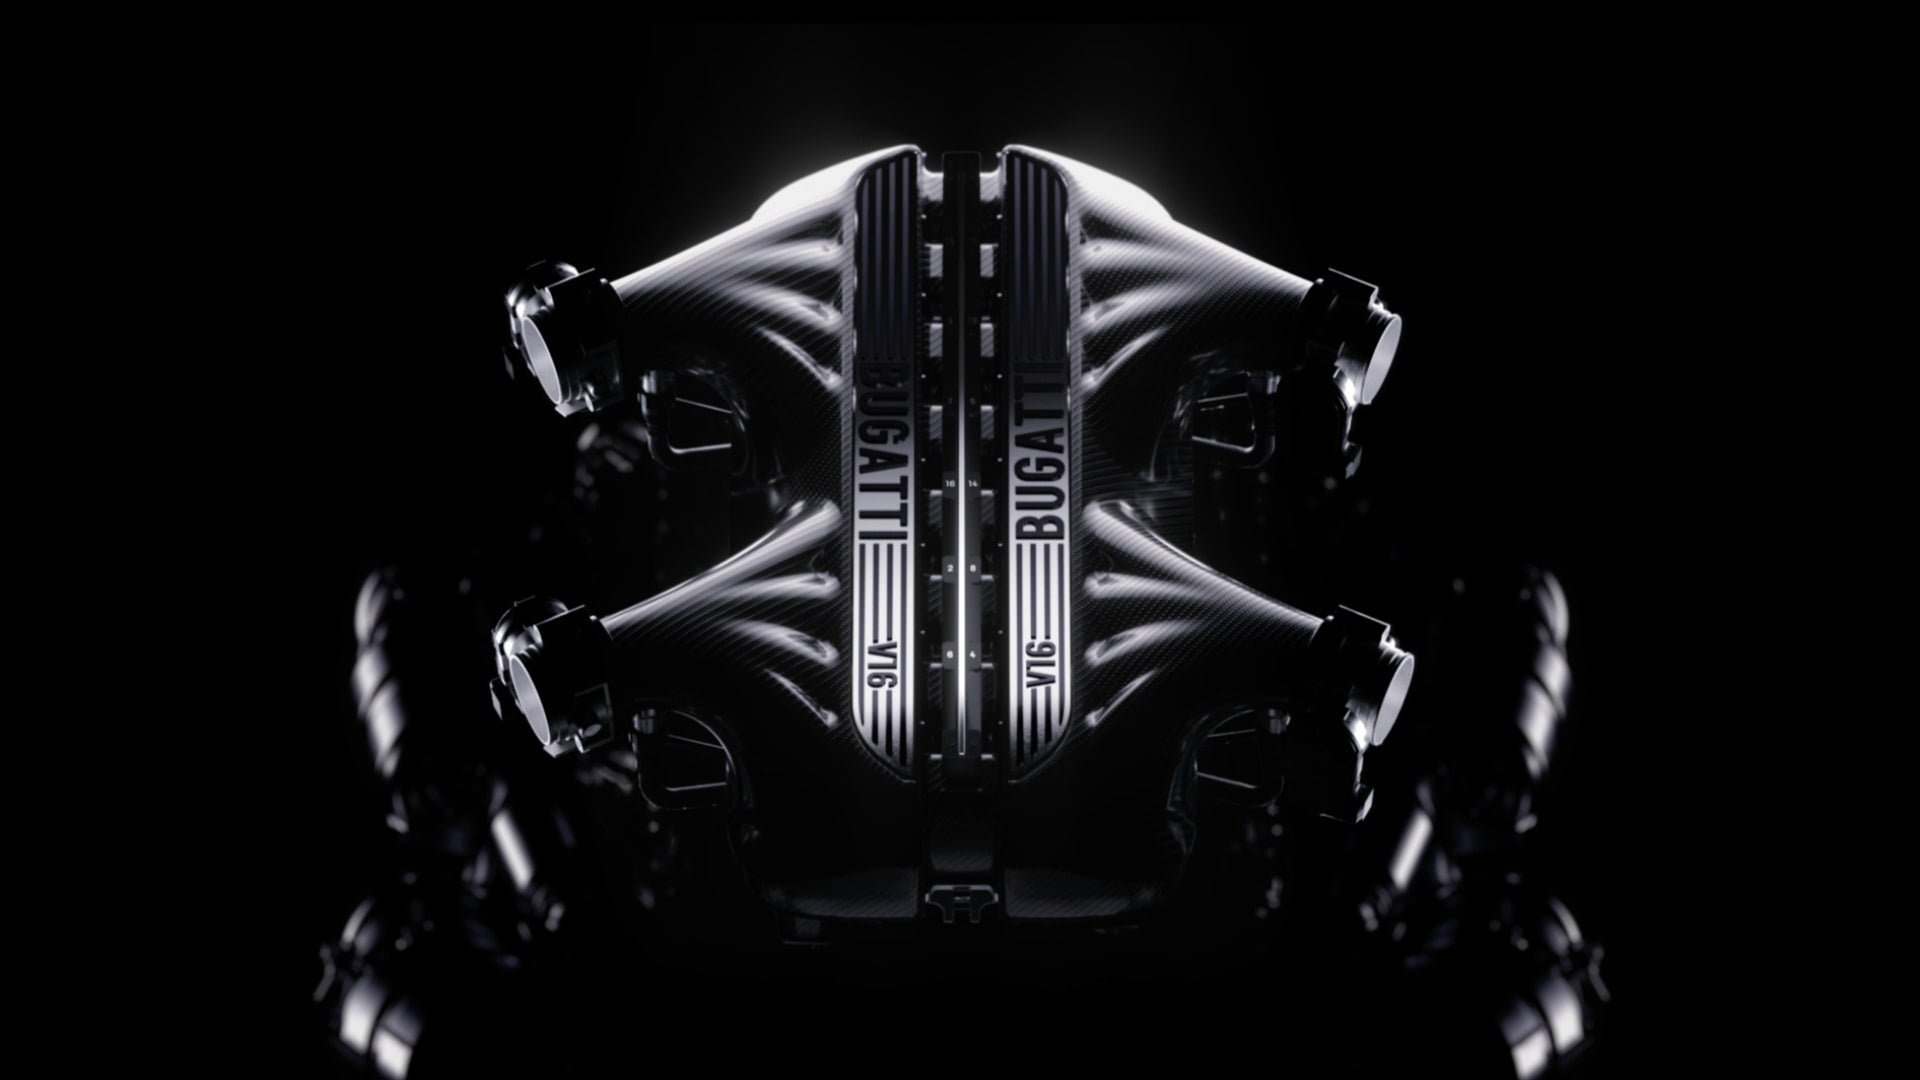 Bugatti unveils new V16 hybrid engine with 1,800 HP, no turbos